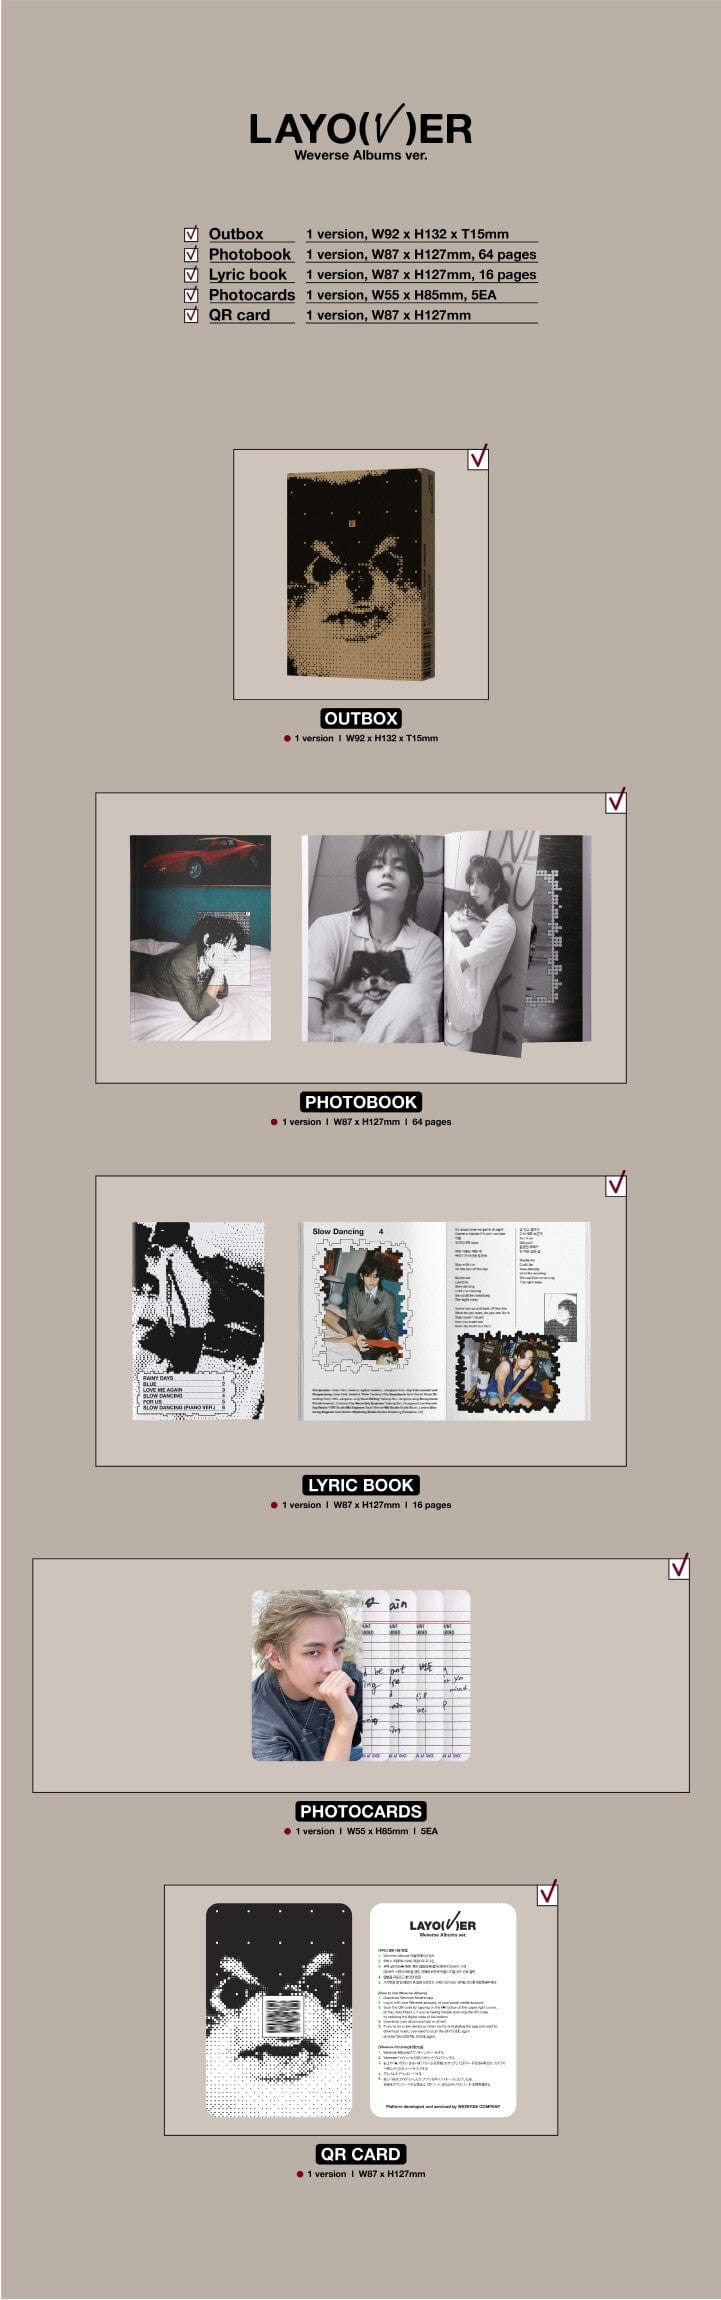 Korea Pop Store V(BTS) - Layover (Weverse Album Ver.) Kawaii Gifts